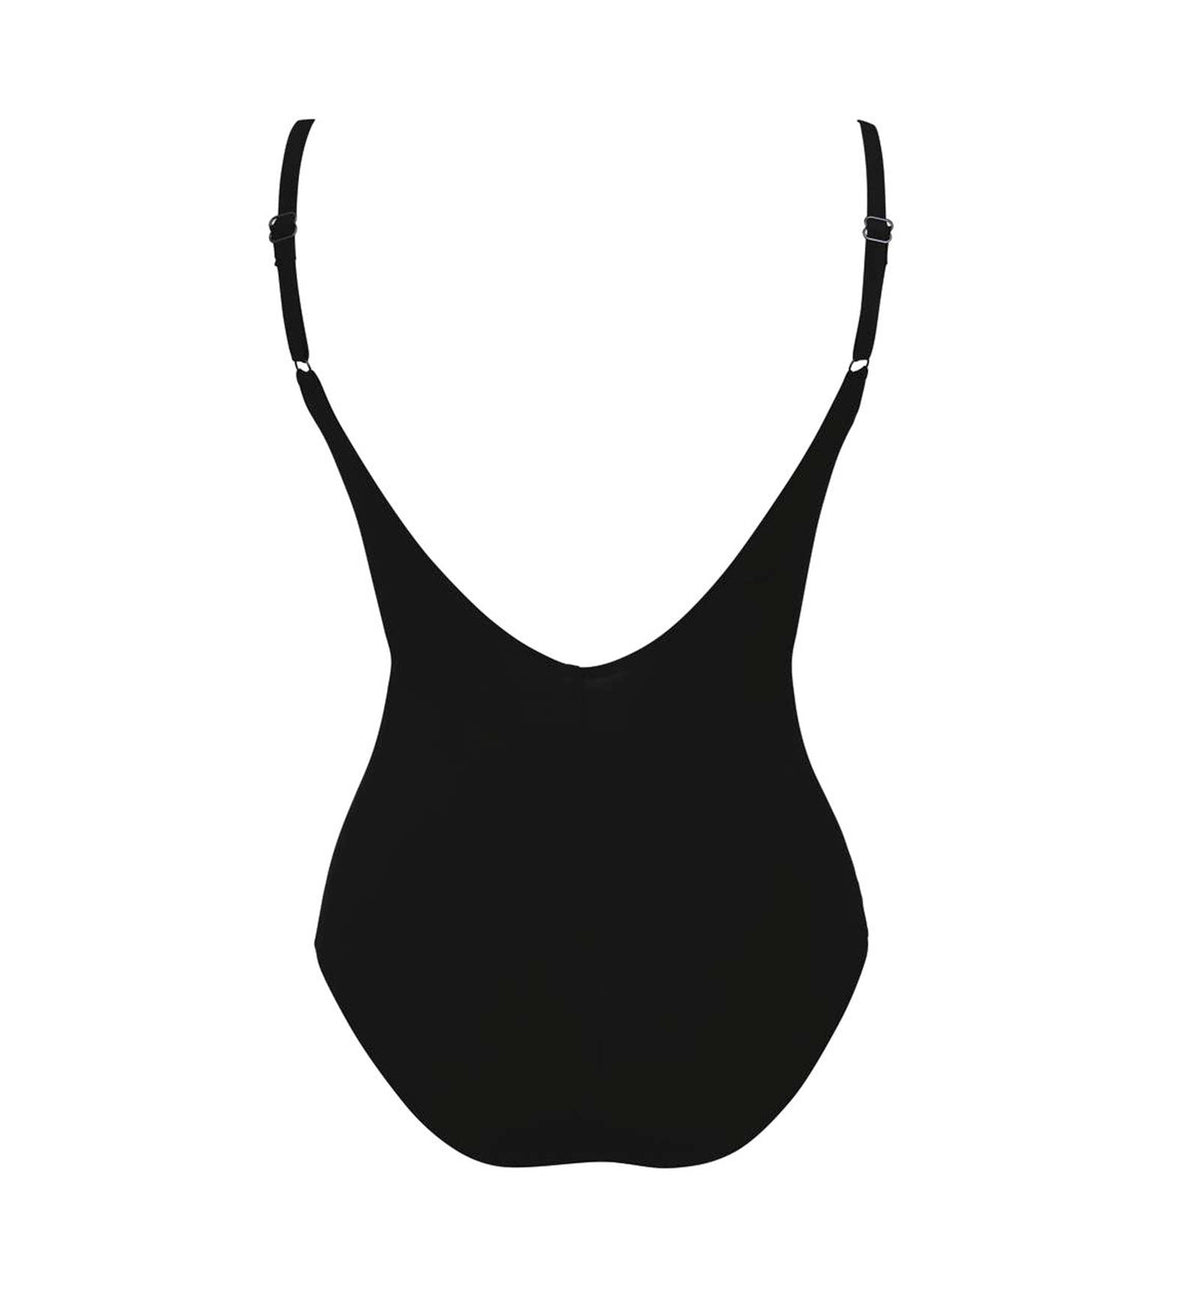 Anita Summer Dot Mabela Slimming One Piece Swimsuit (7790),32D,Black/White - Black/White,32D